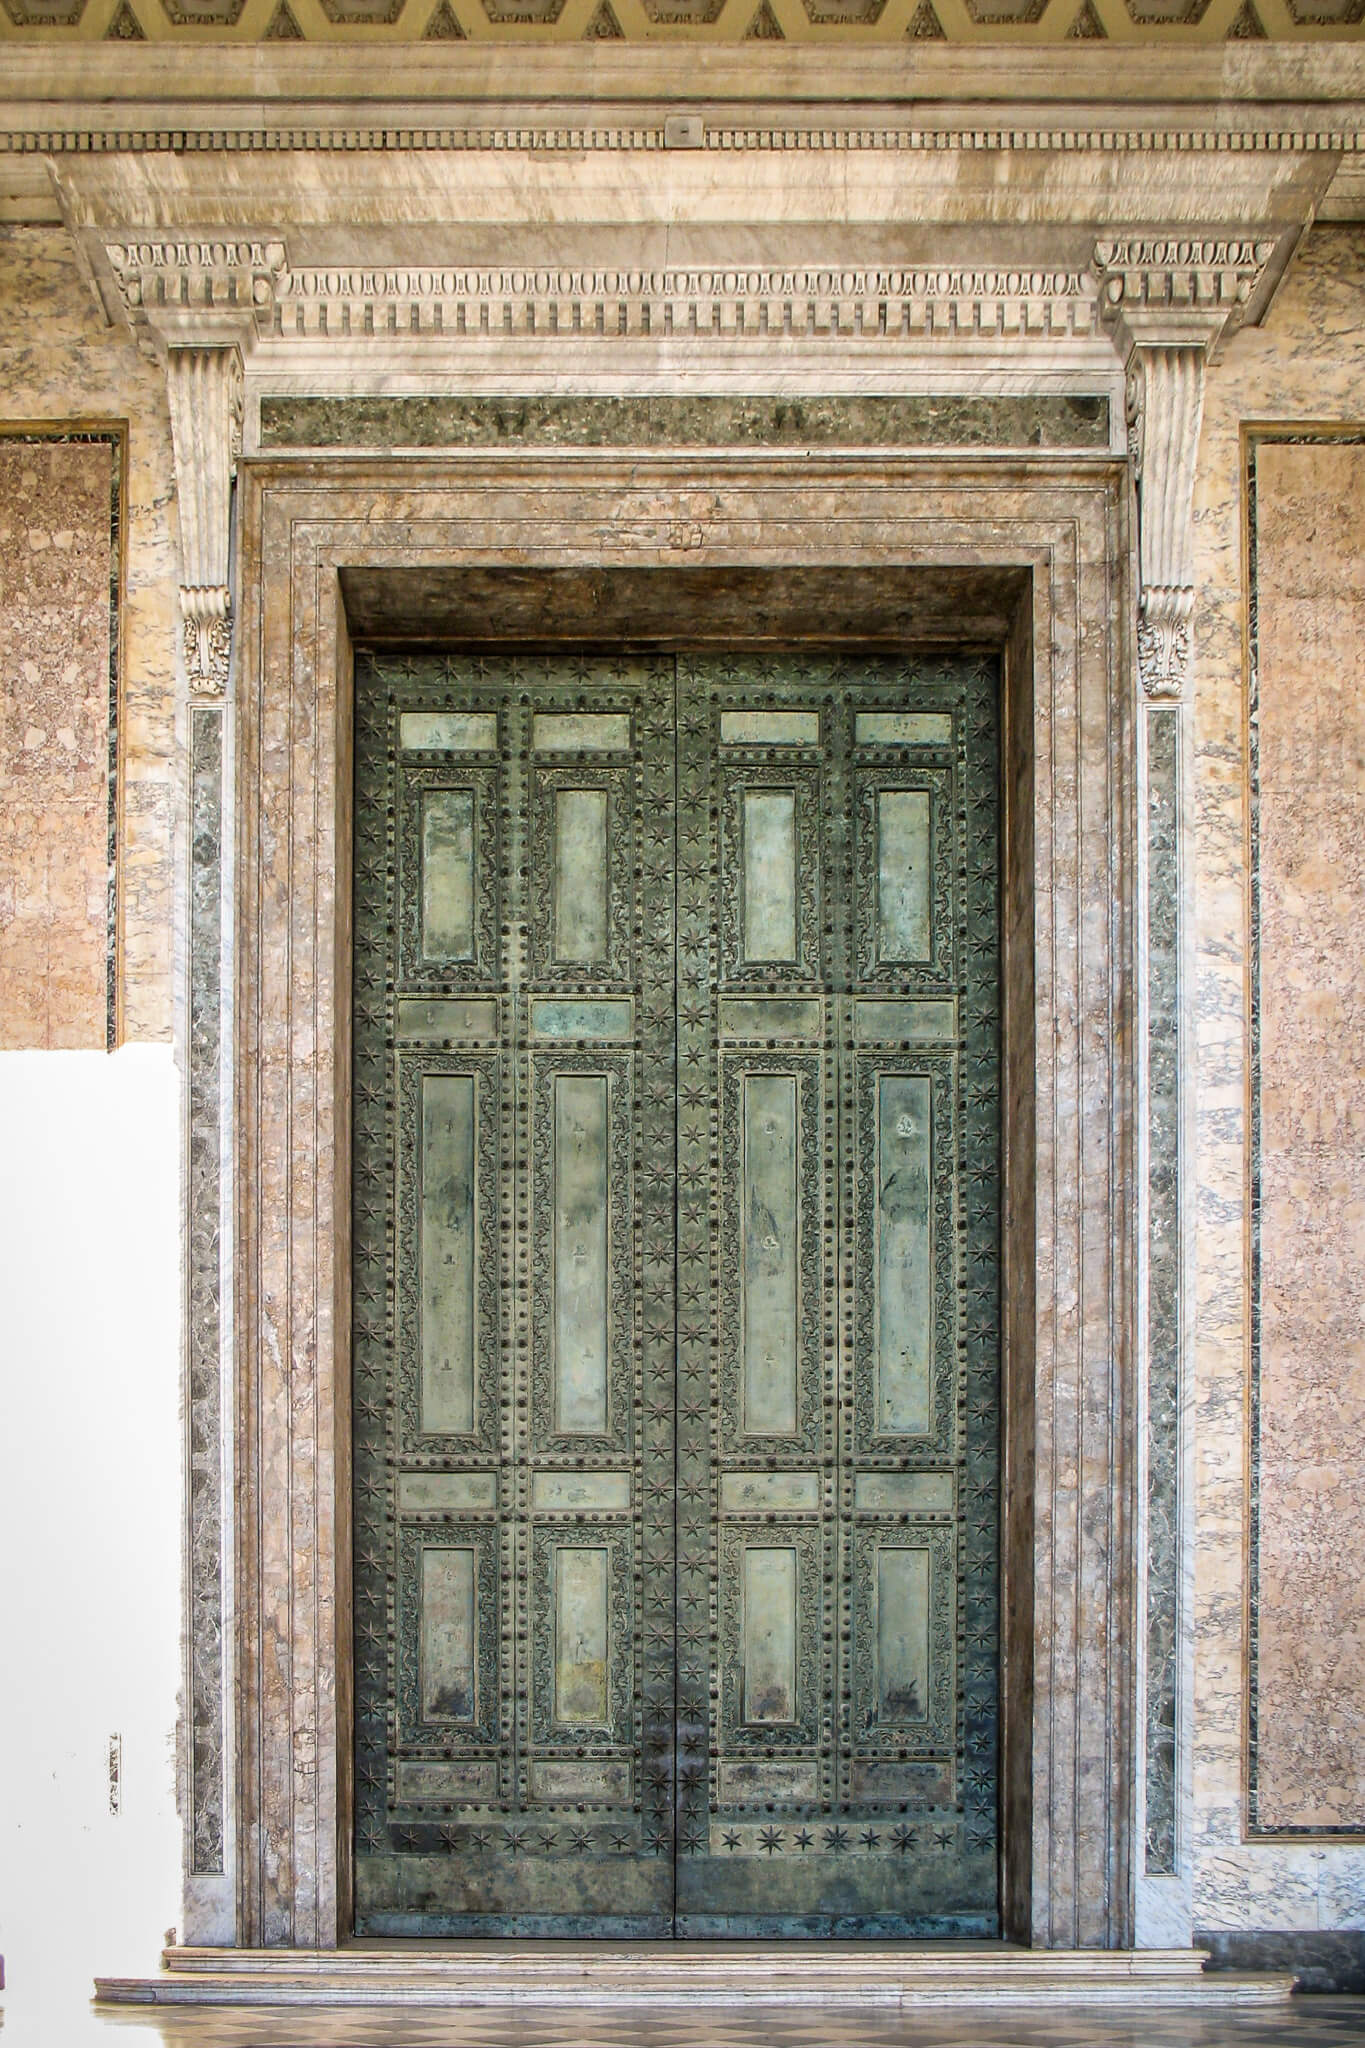 The ancient Roman doors adorning San Giovanni in Laterano